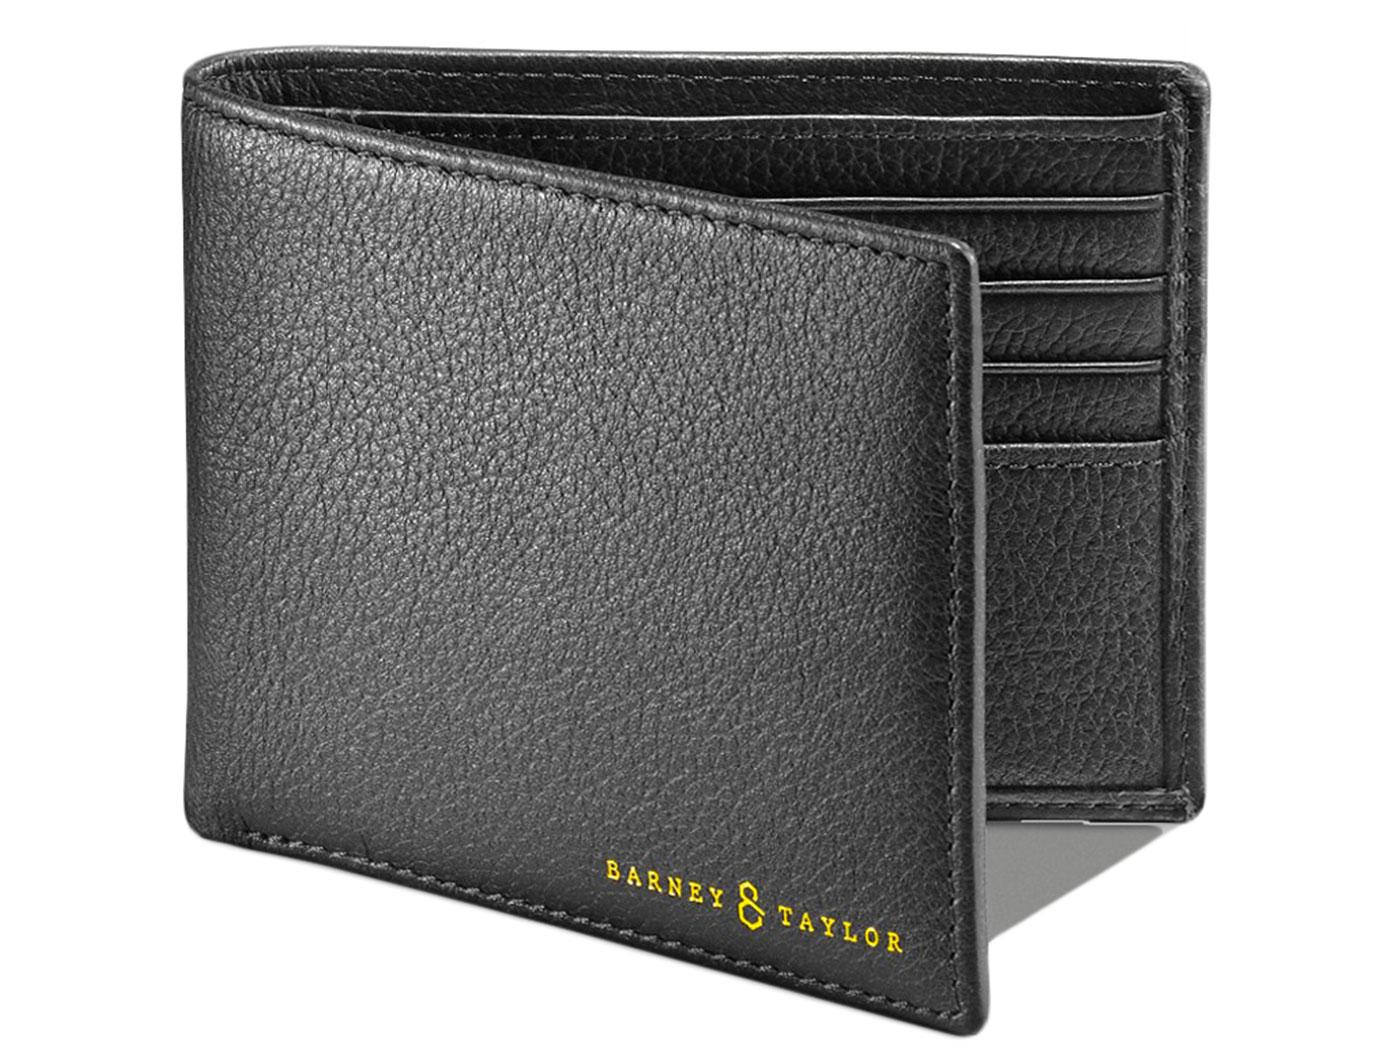 BARNEY & TAYLOR Woodley Retro Mod Leather Billfold Wallet Black